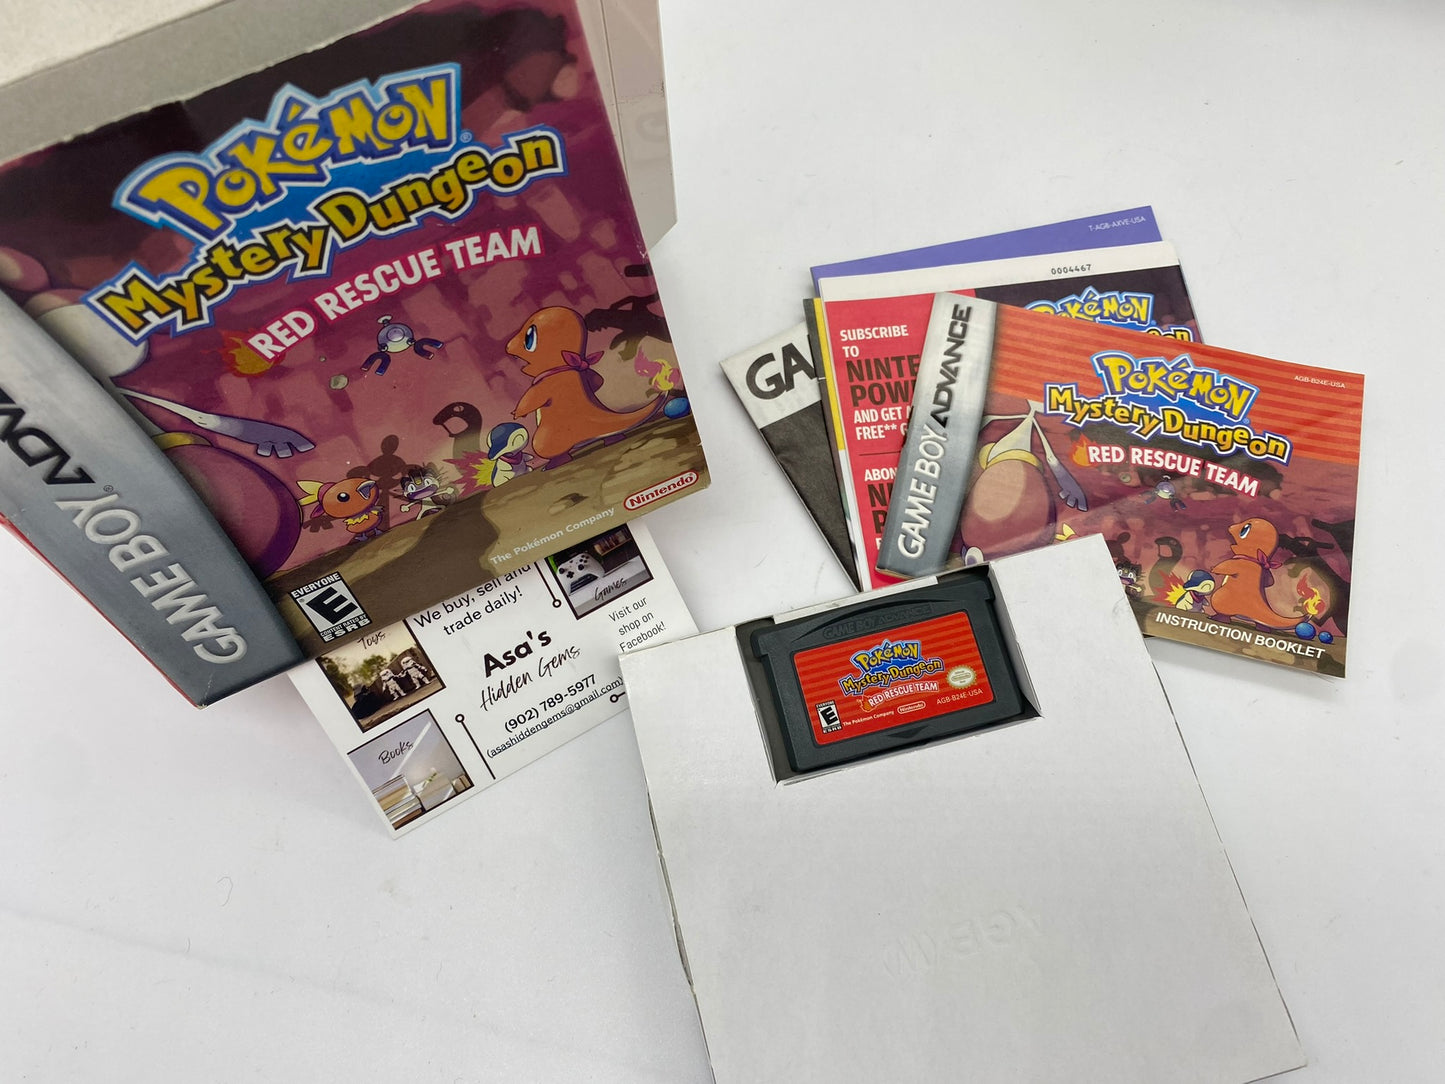 Pokemon Mystery Dungeon: Red Rescue Team (Nintendo Game Boy Advance, 2006)